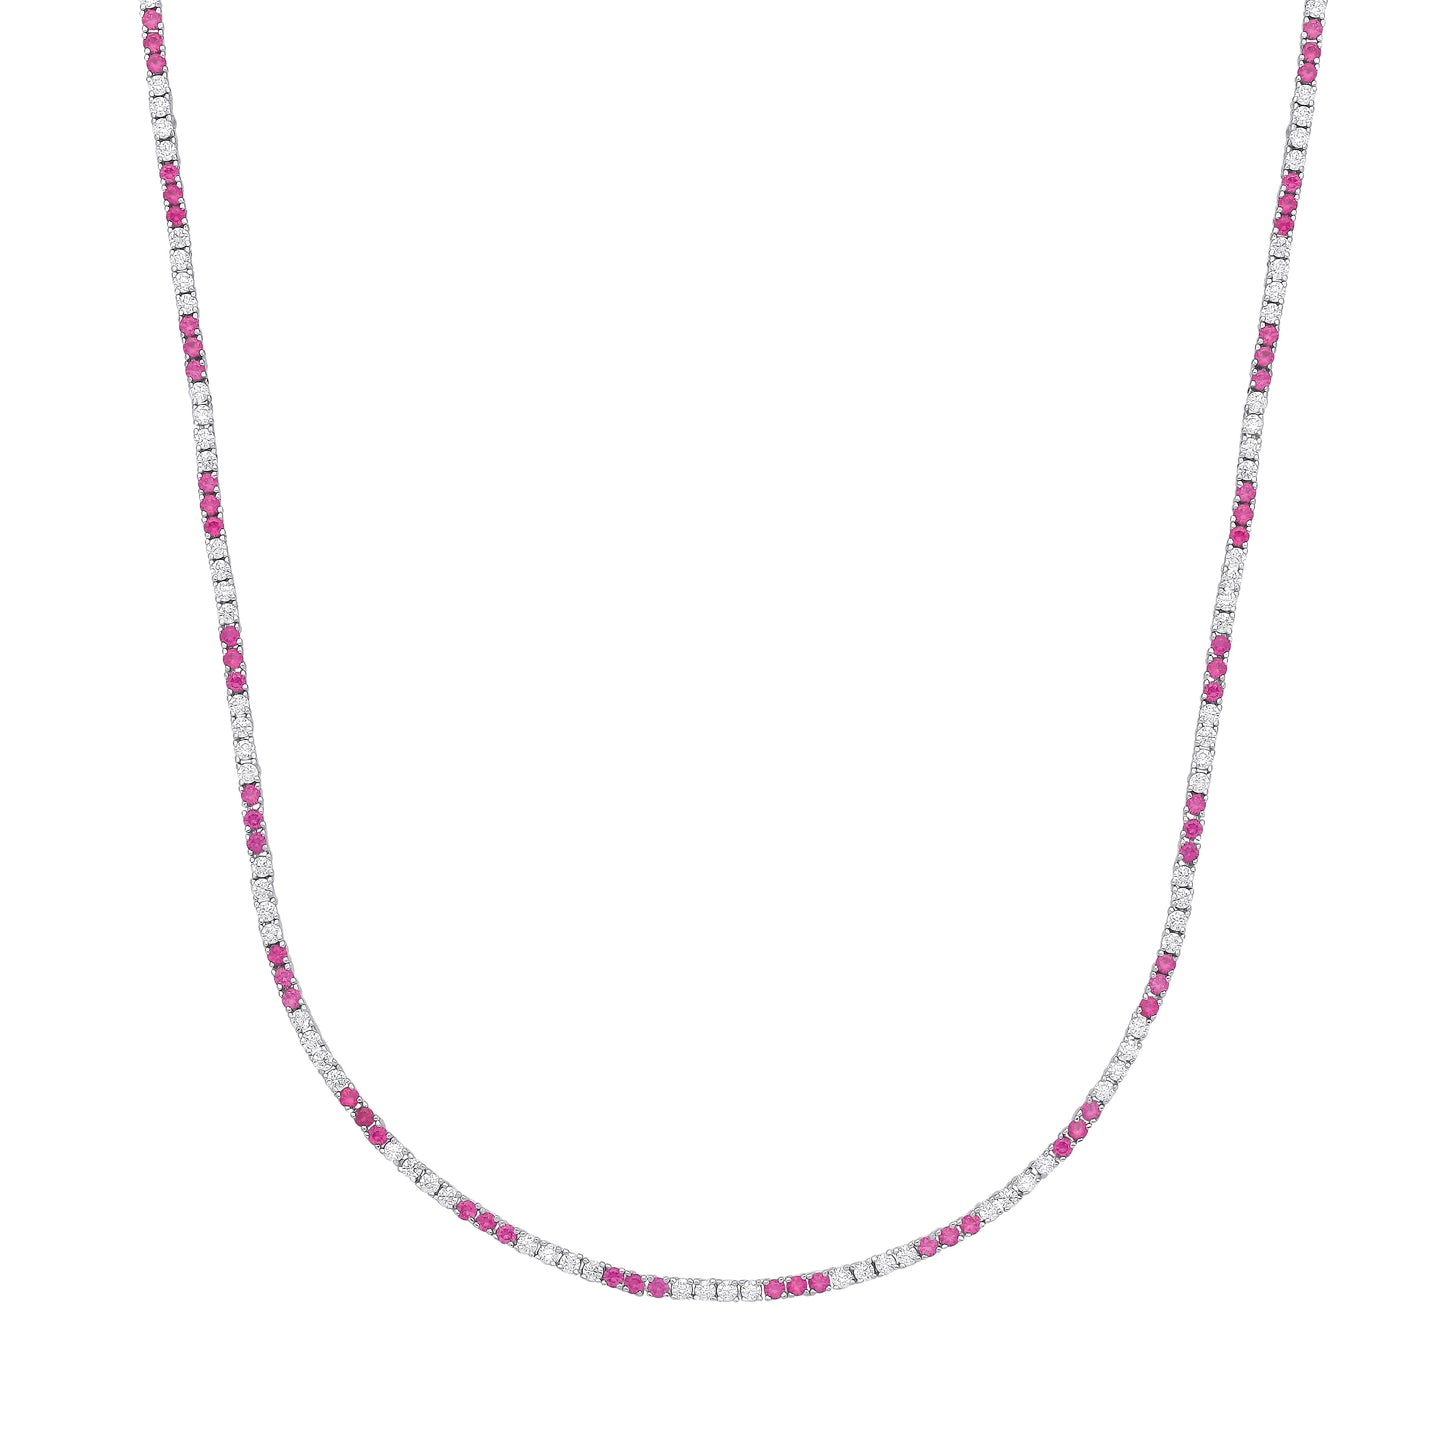 Silver  Alternating Eternity Stripes Tennis Necklace 16" + 1.5" - GVK434RU